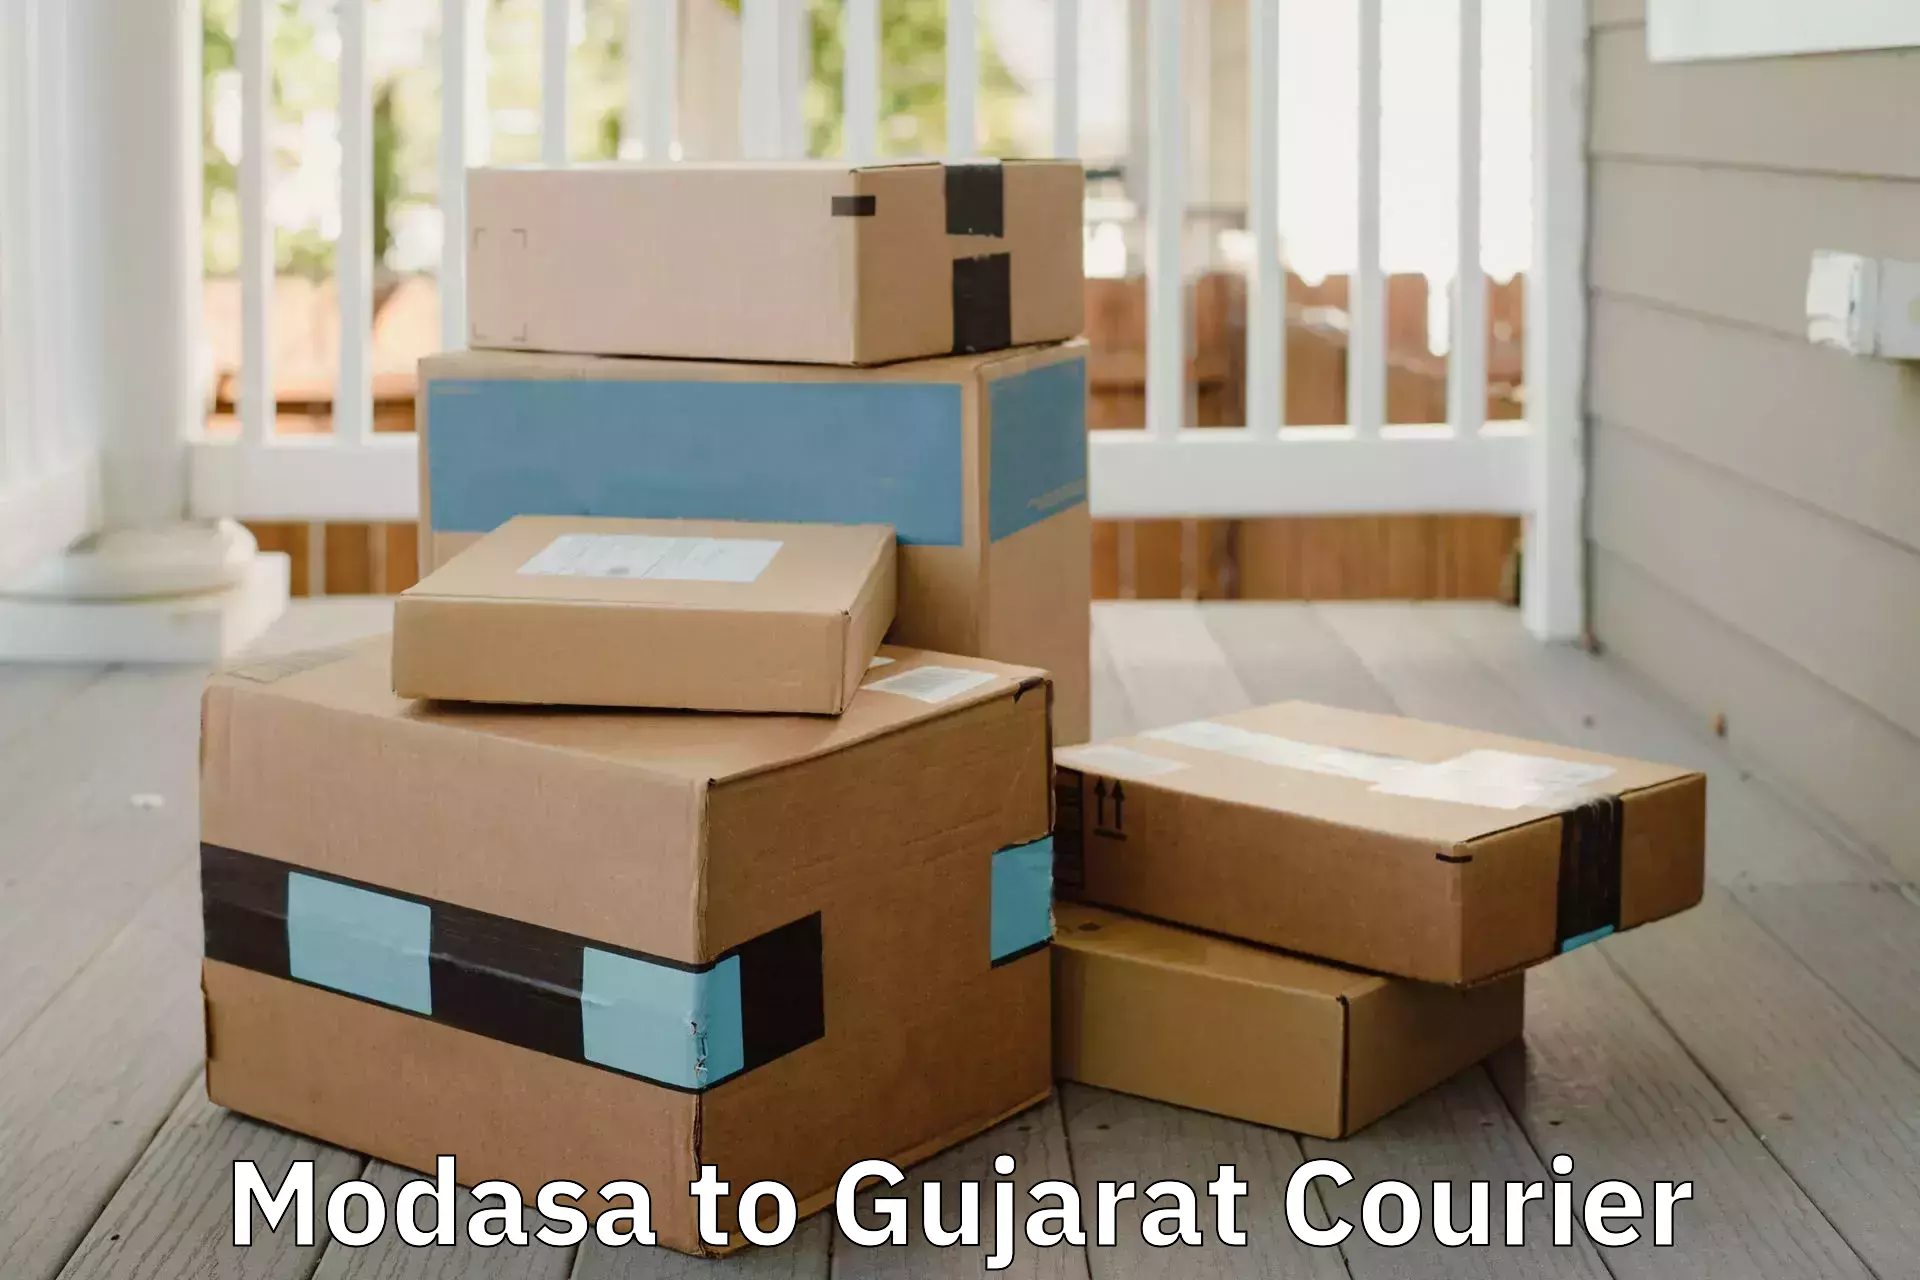 Professional movers Modasa to Gujarat